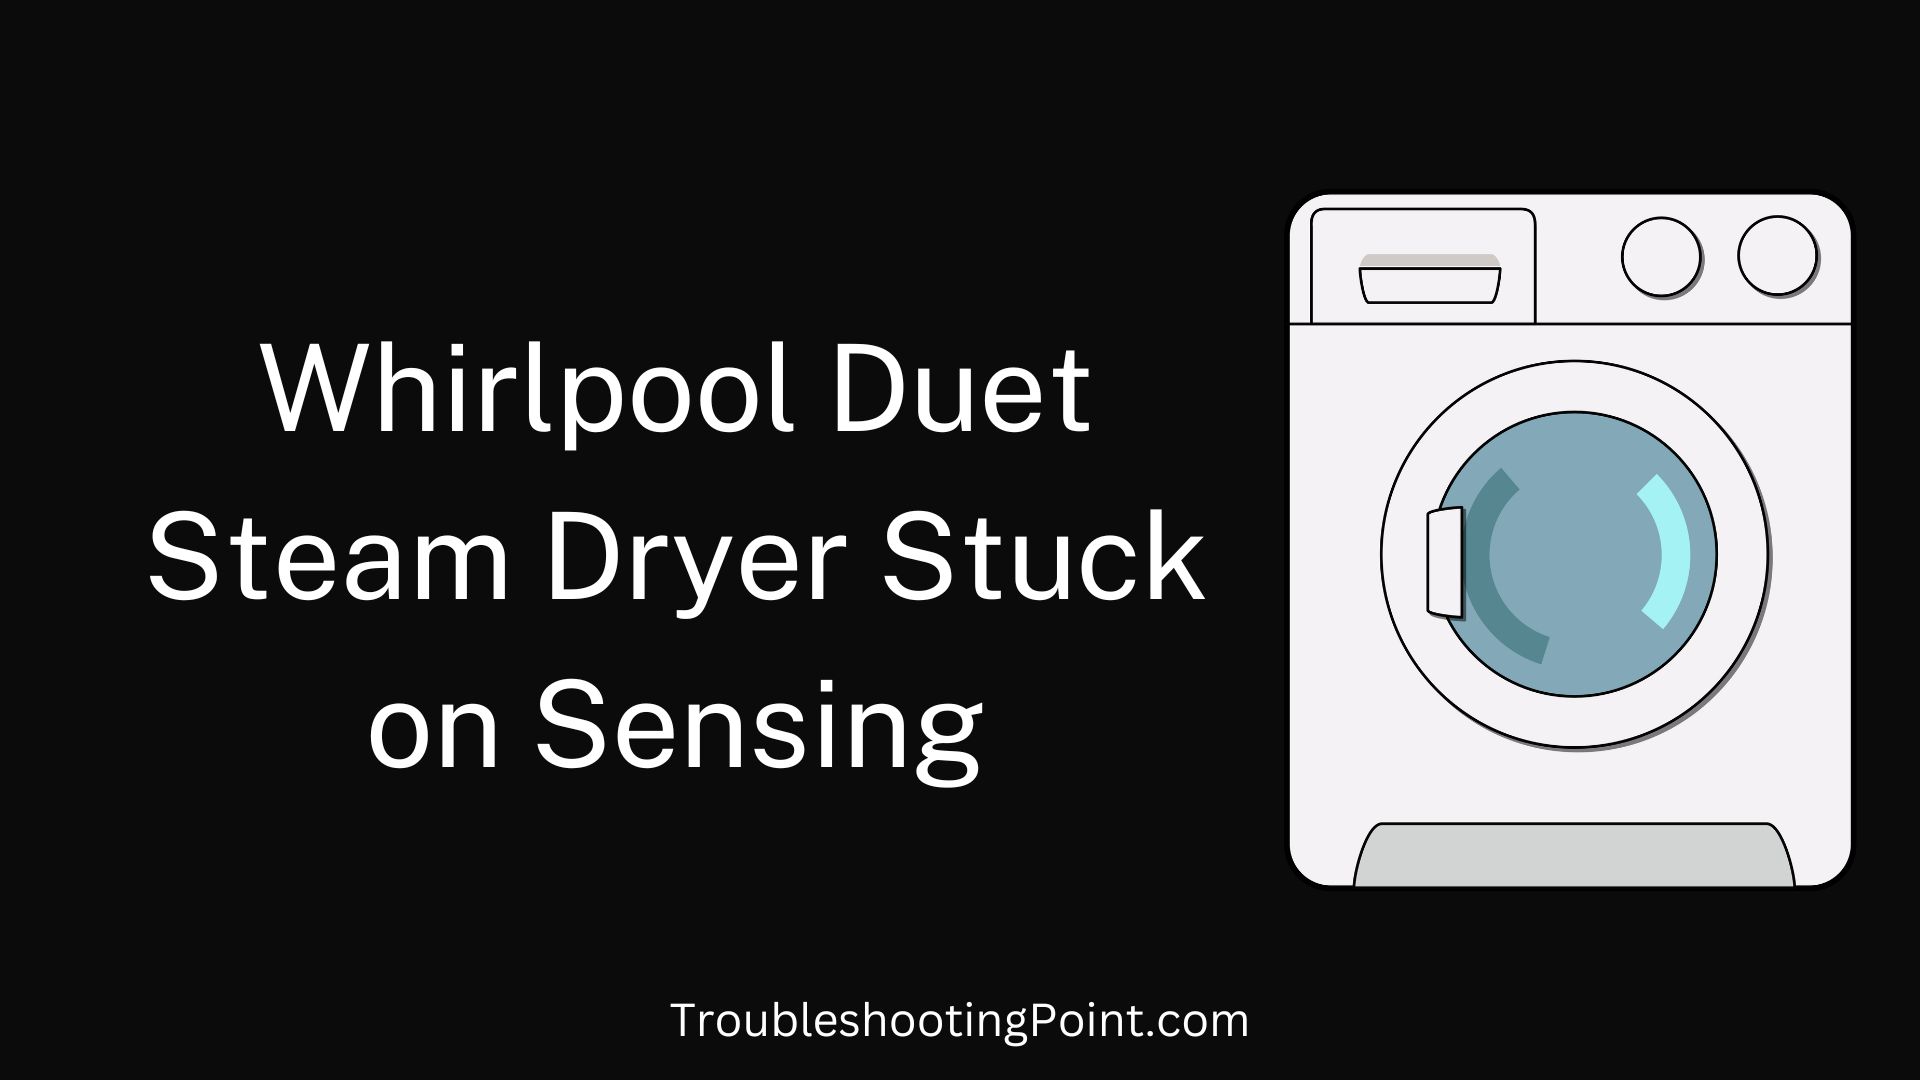 Whirlpool Duet Steam Dryer Stuck on Sensing